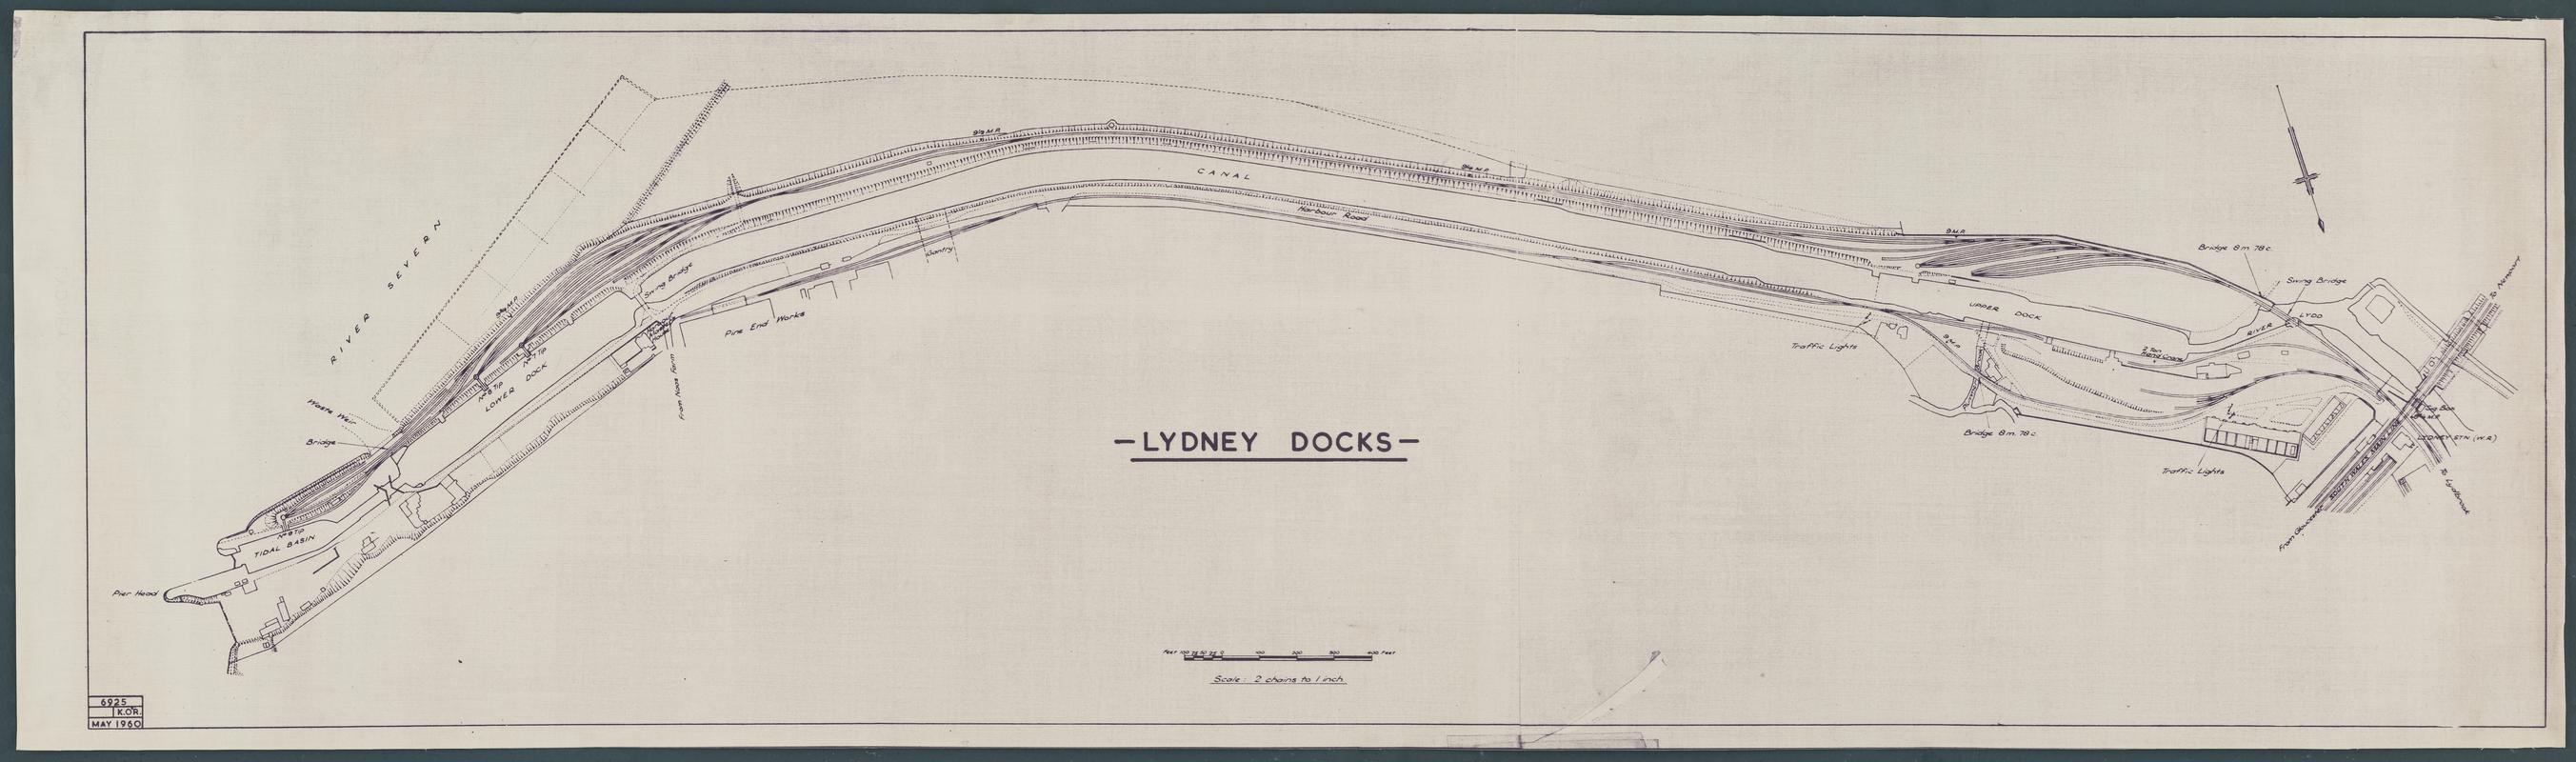 Plan 'Lydney Docks', 1960